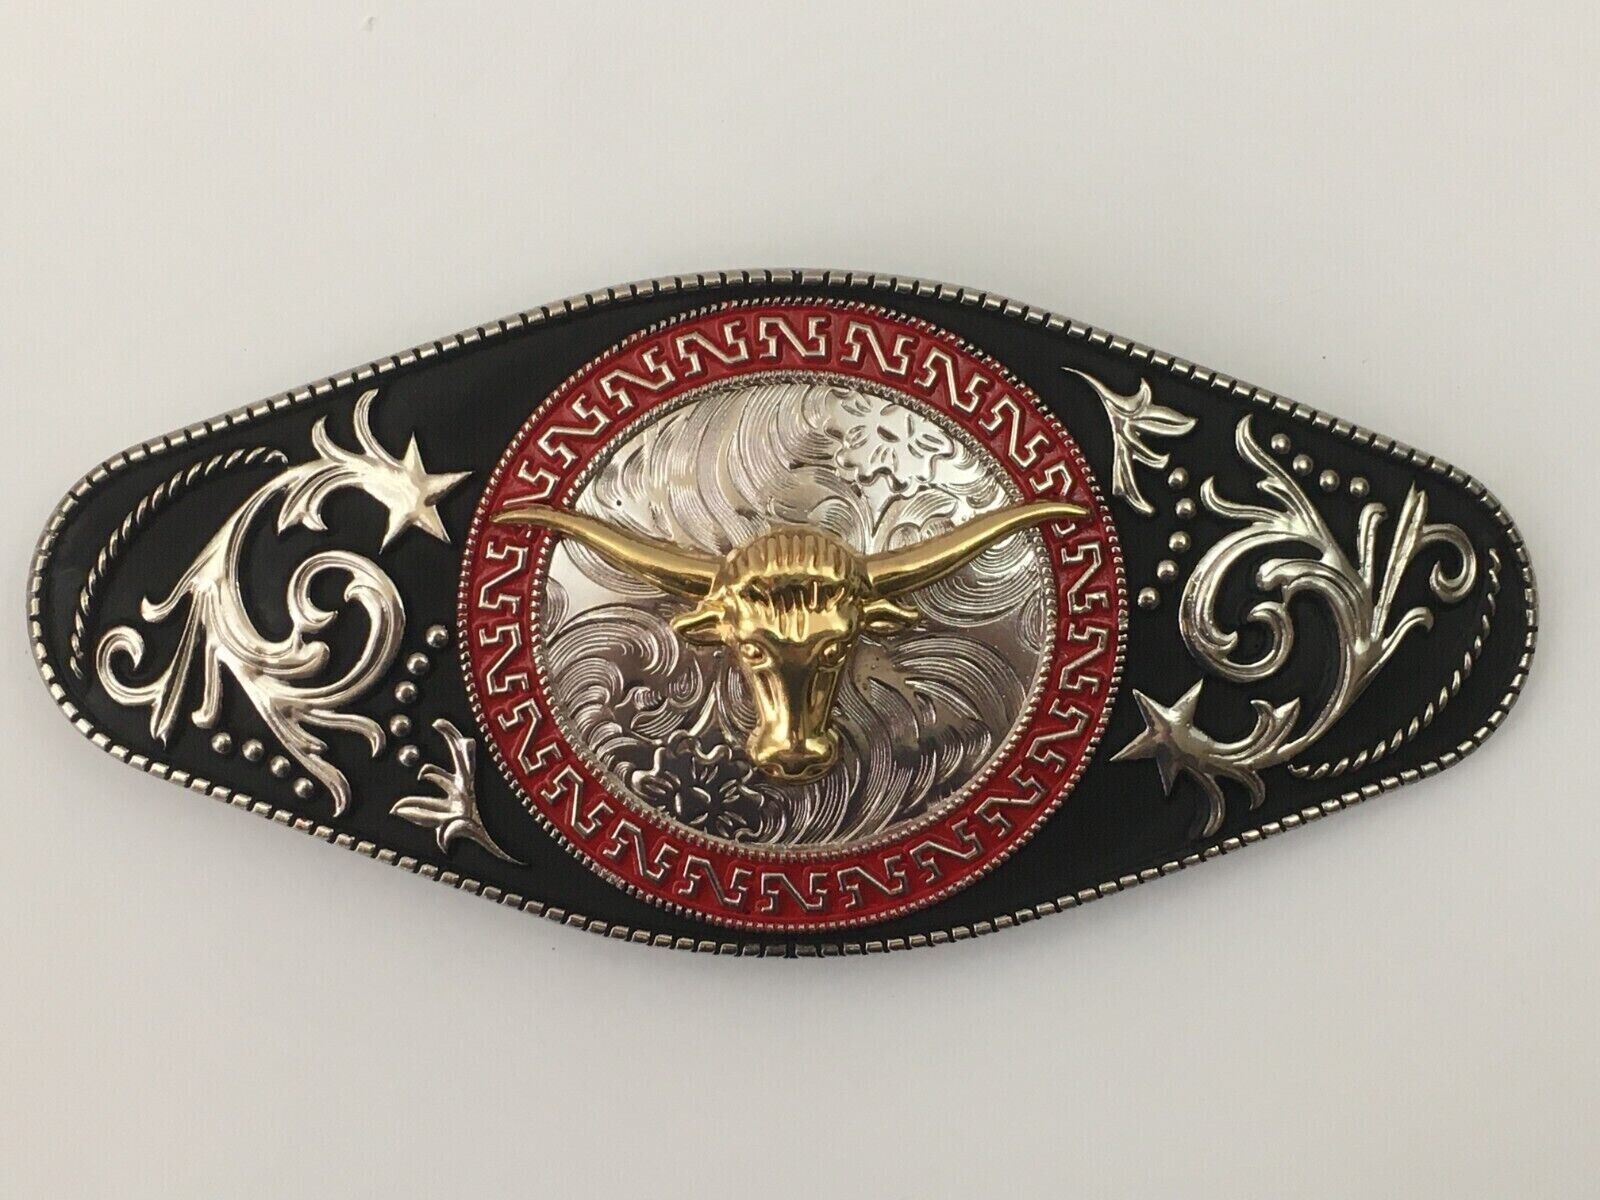 Cowboy Belt Buckle - BIG Rodeo Bull with Horns Belt Buckles USA